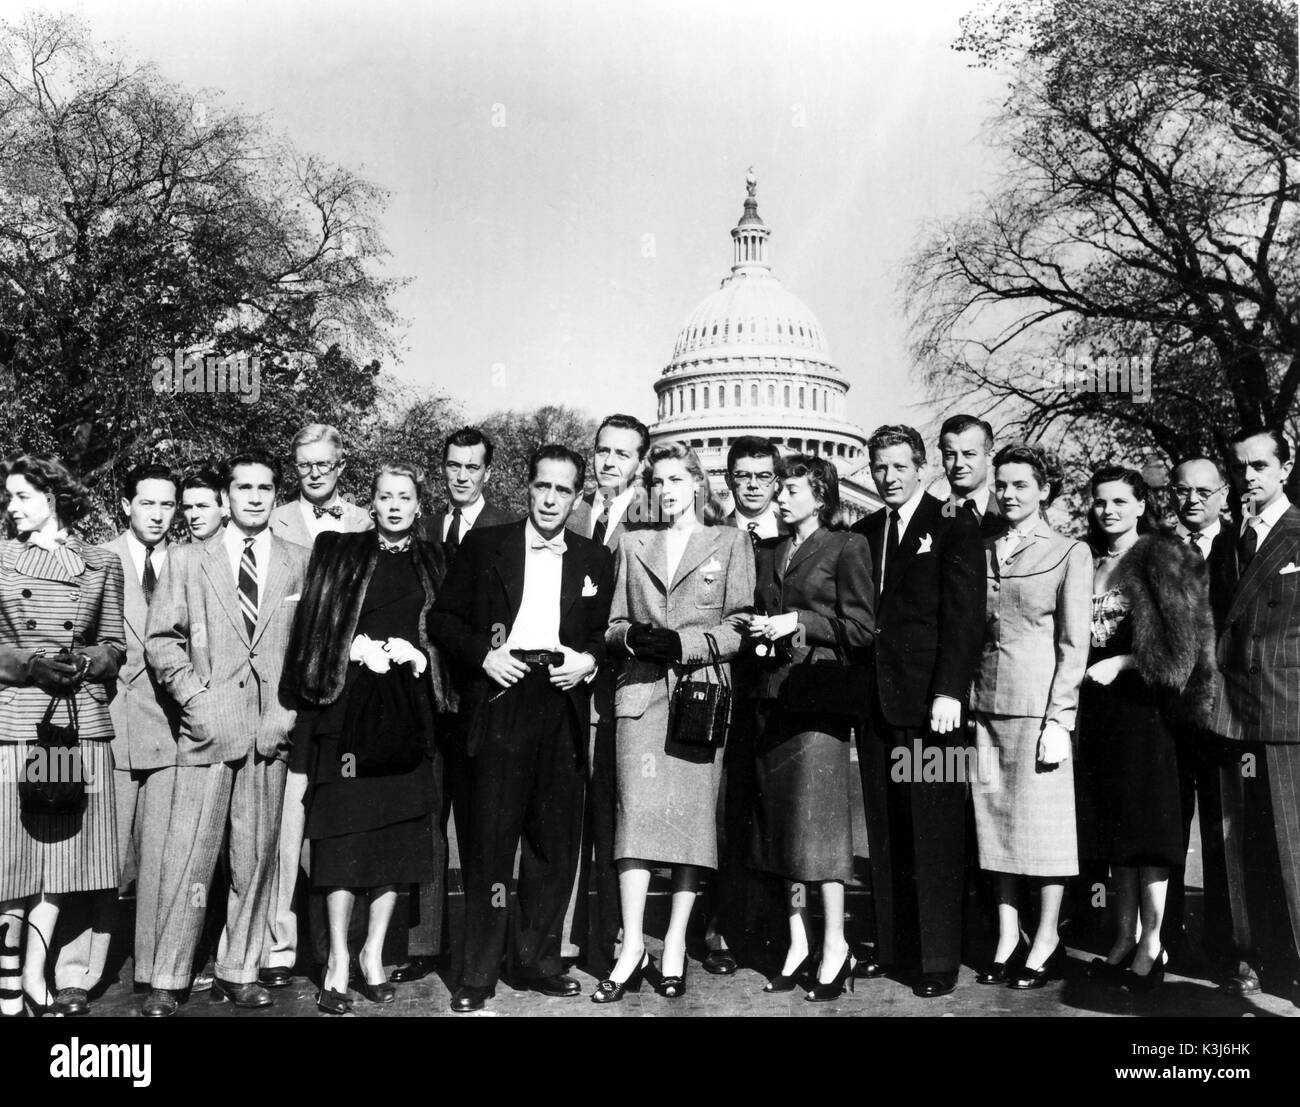 'COMMITTEE FOR THE FIRST AMENDMENT' in Washington DC October, 1947  [?], [?], [?], RICHARD CONTE, PHILIP DUNNE, JUNE HAVOC, JOHN HUSTON, HUMPHREY BOGART, PAUL HENREID, LAUREN BACALL, [?], EVELYN KEYES, DANNY KAYE, SHEPPERD STRUDWICK, JANE WYATT, GERADINE BROOKS, [?], LARRY ADLER Stock Photo